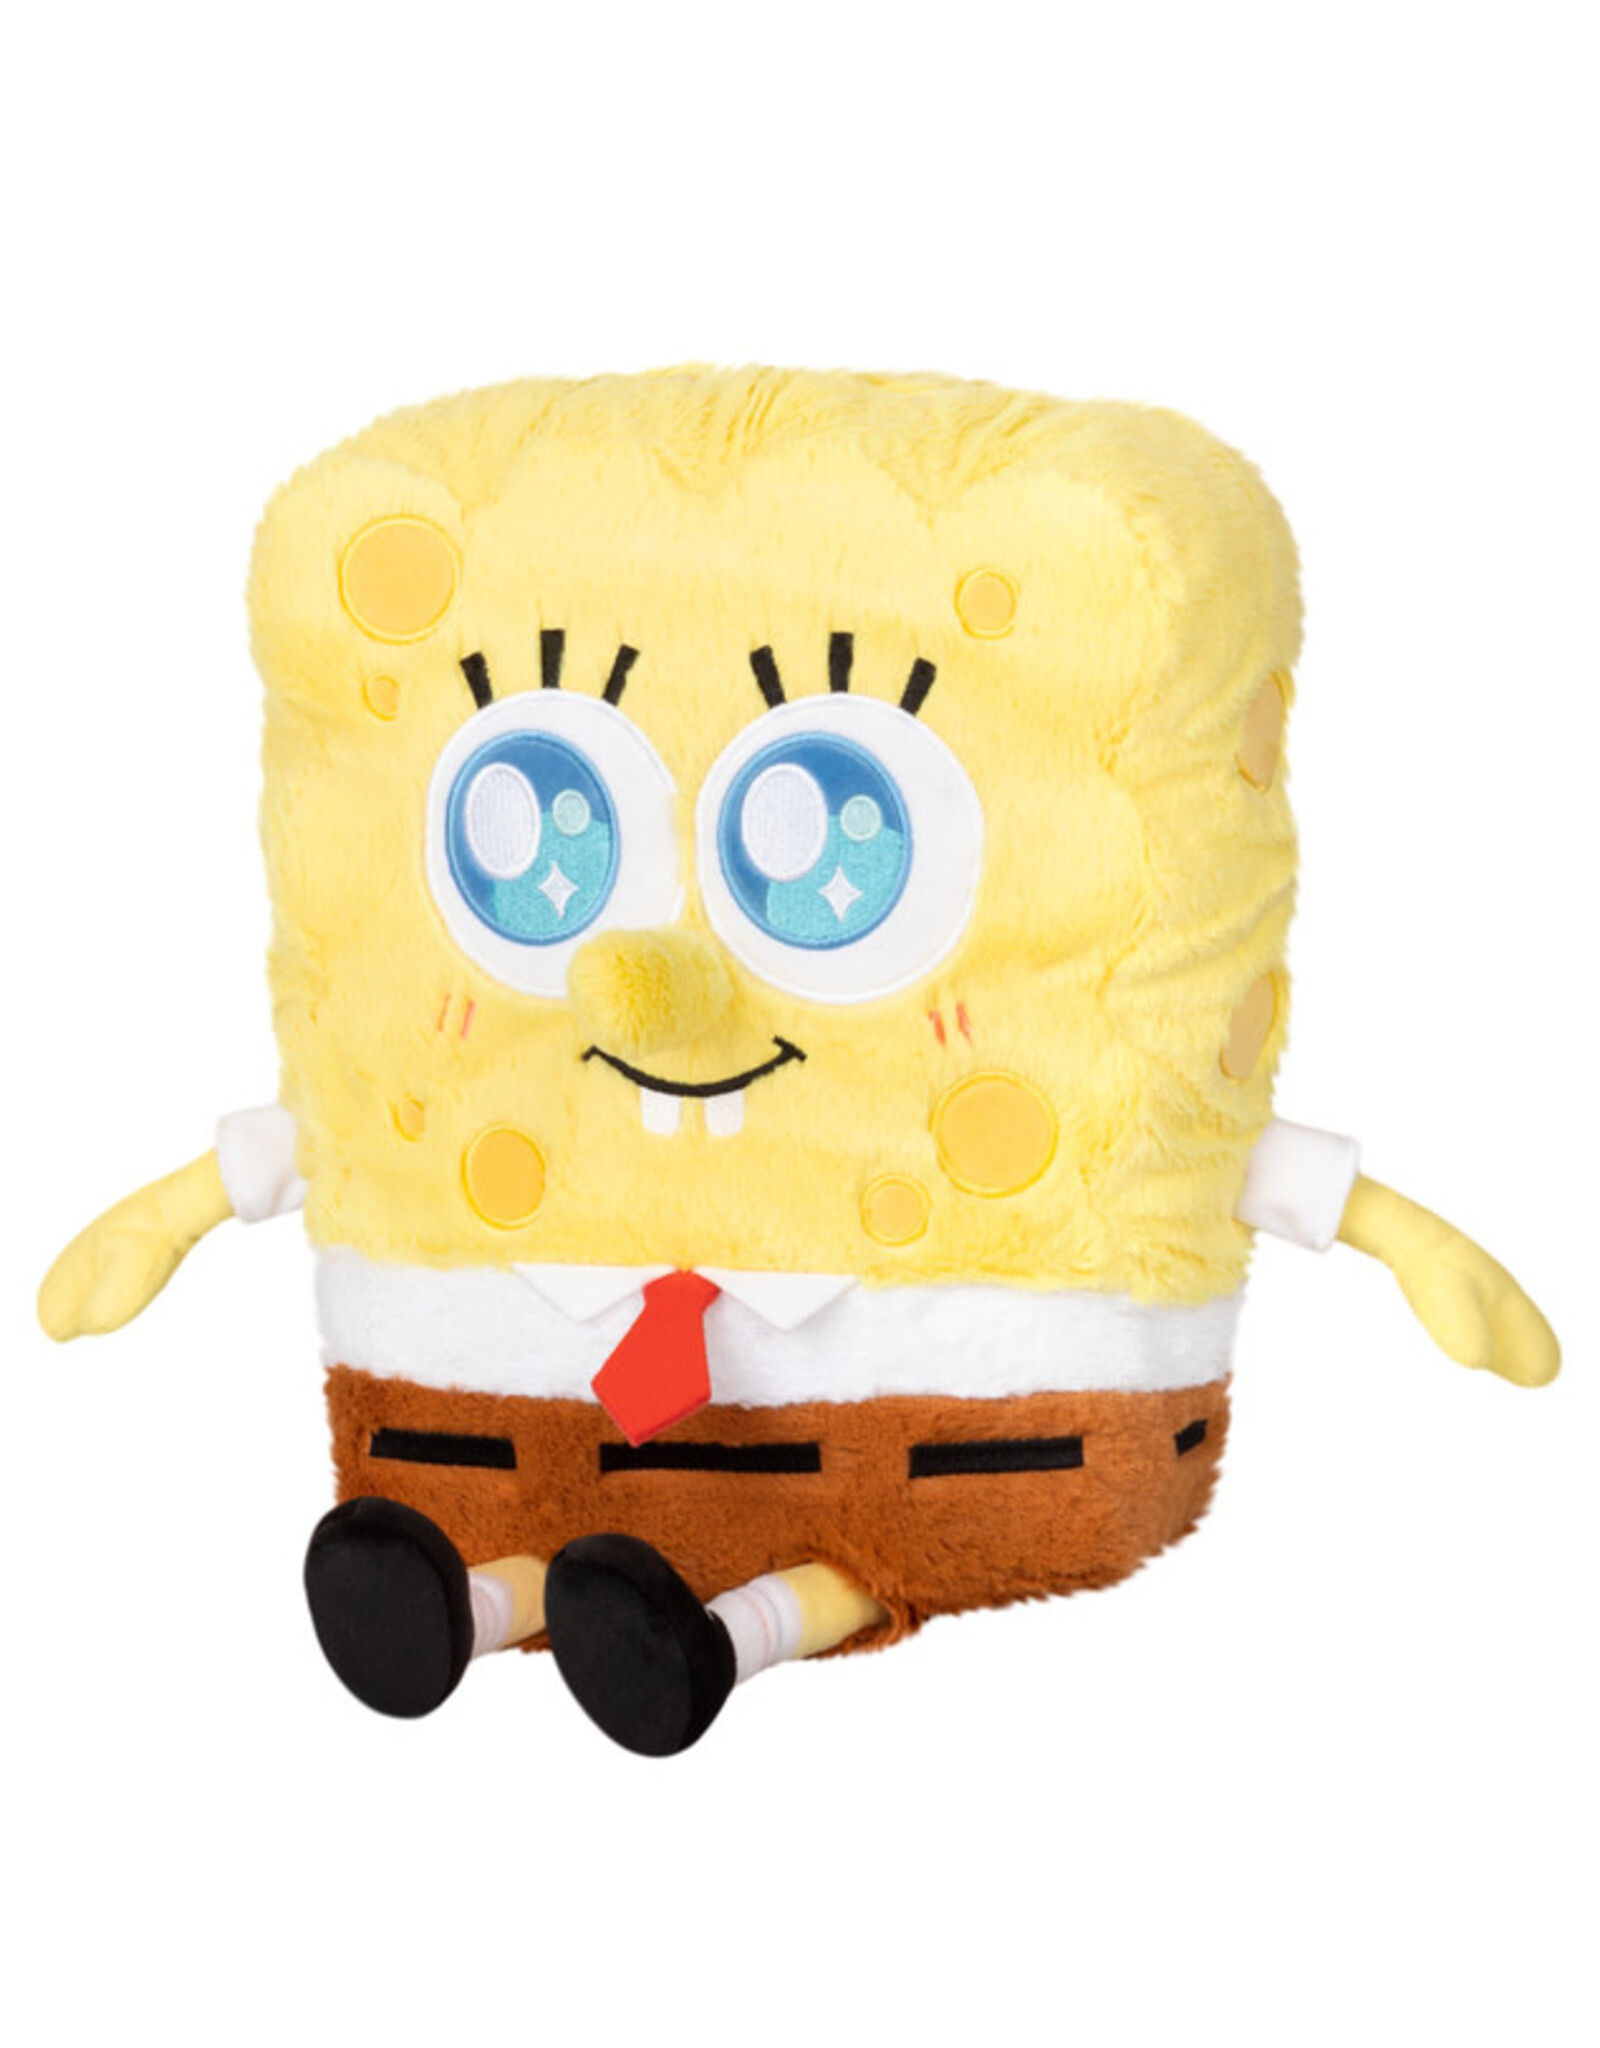 Squishable Squishable Loves Spongebob Squarepants - Spongebob